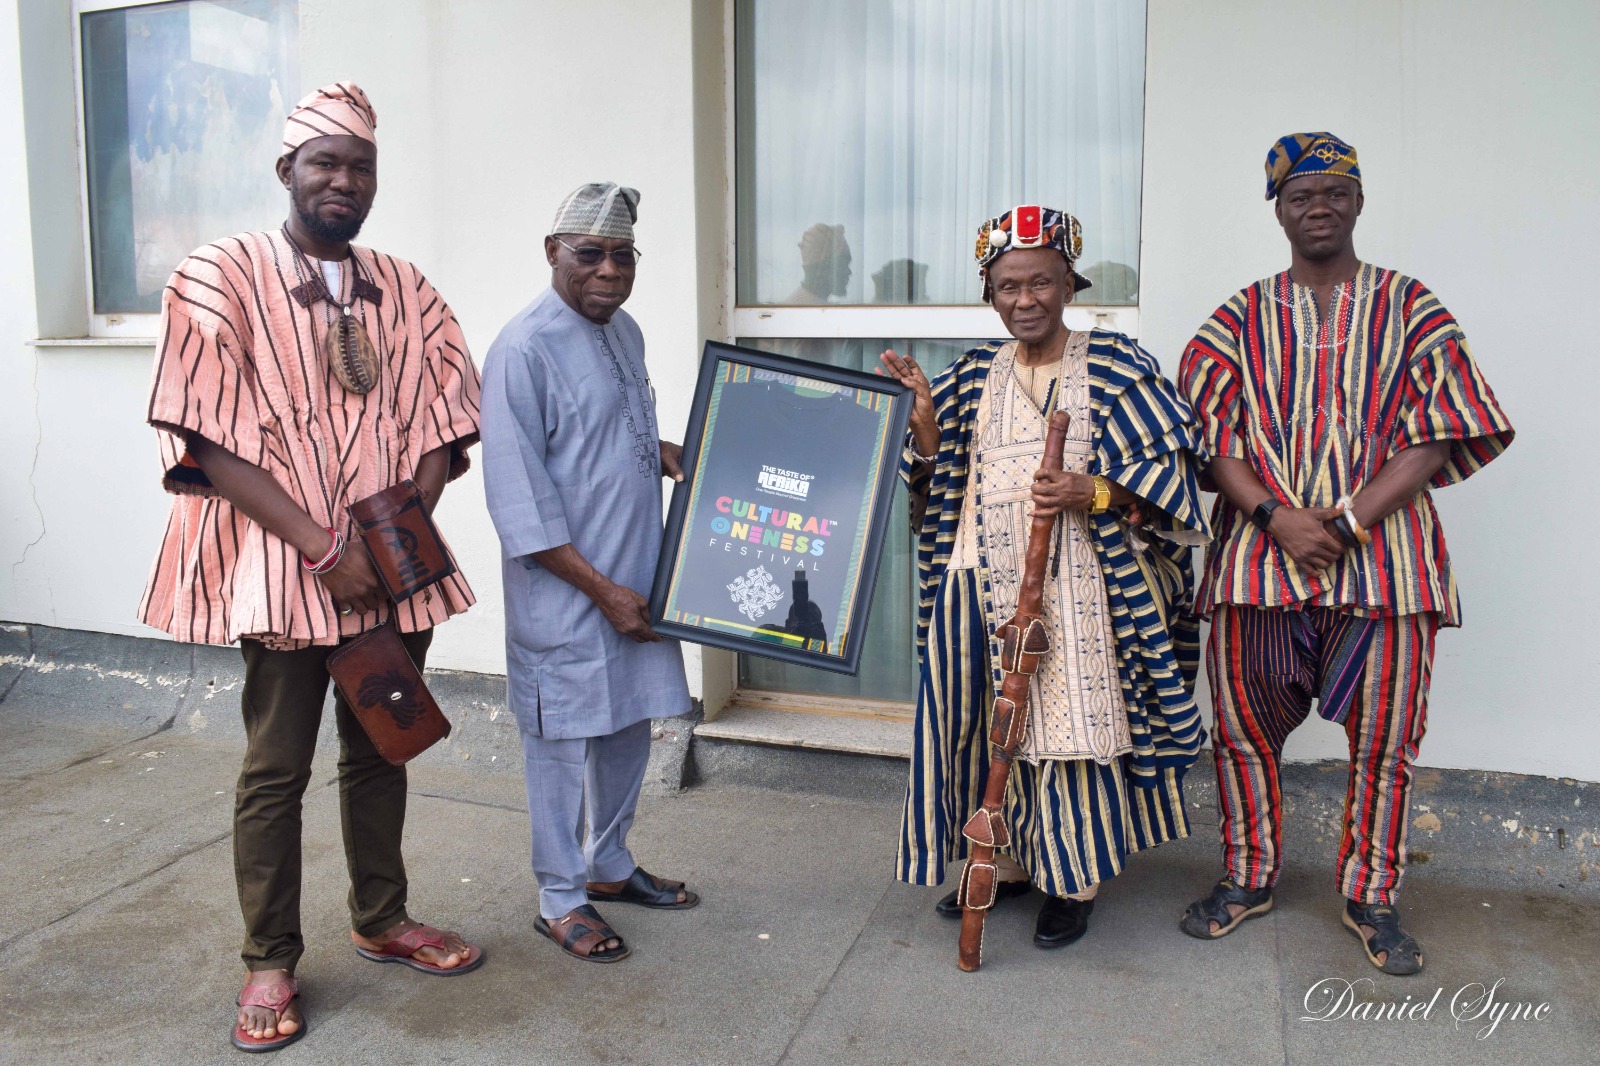 Former Nigerian President Olusegun Obasanjo endorses Cultural Oneness Festival